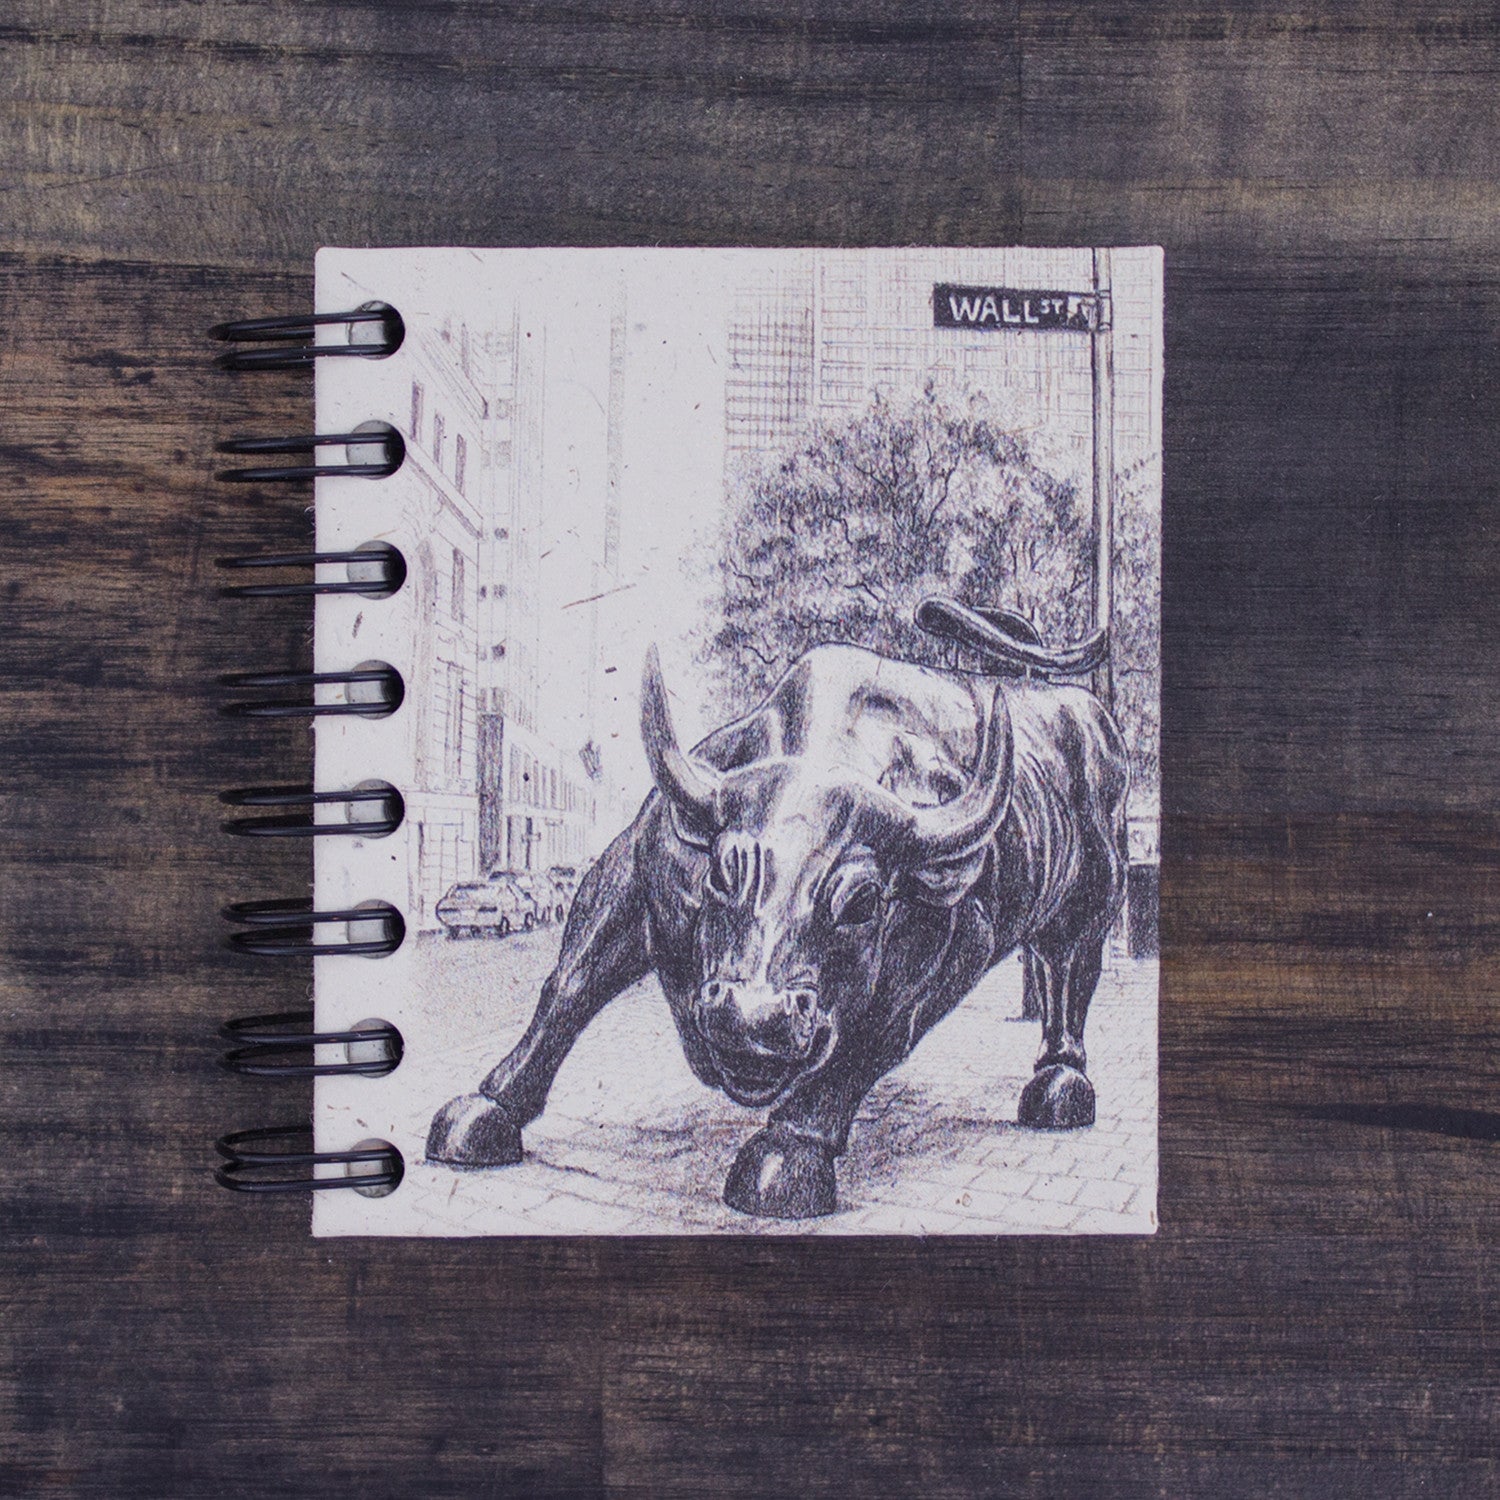 Small Notebook Wall Street Bull Sketch